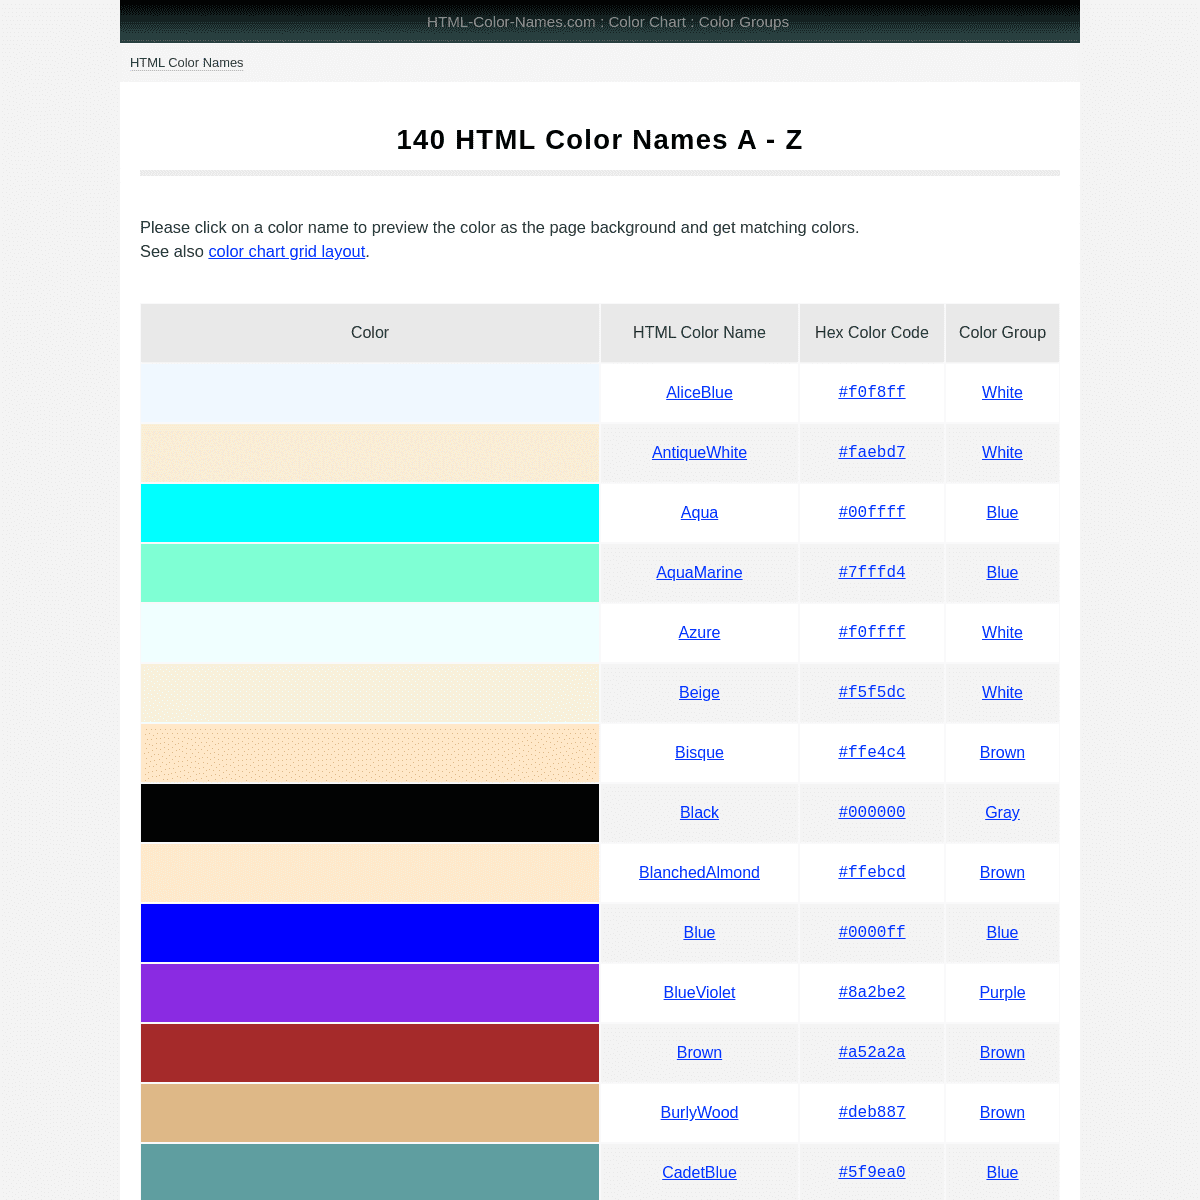 A complete backup of html-color-names.com